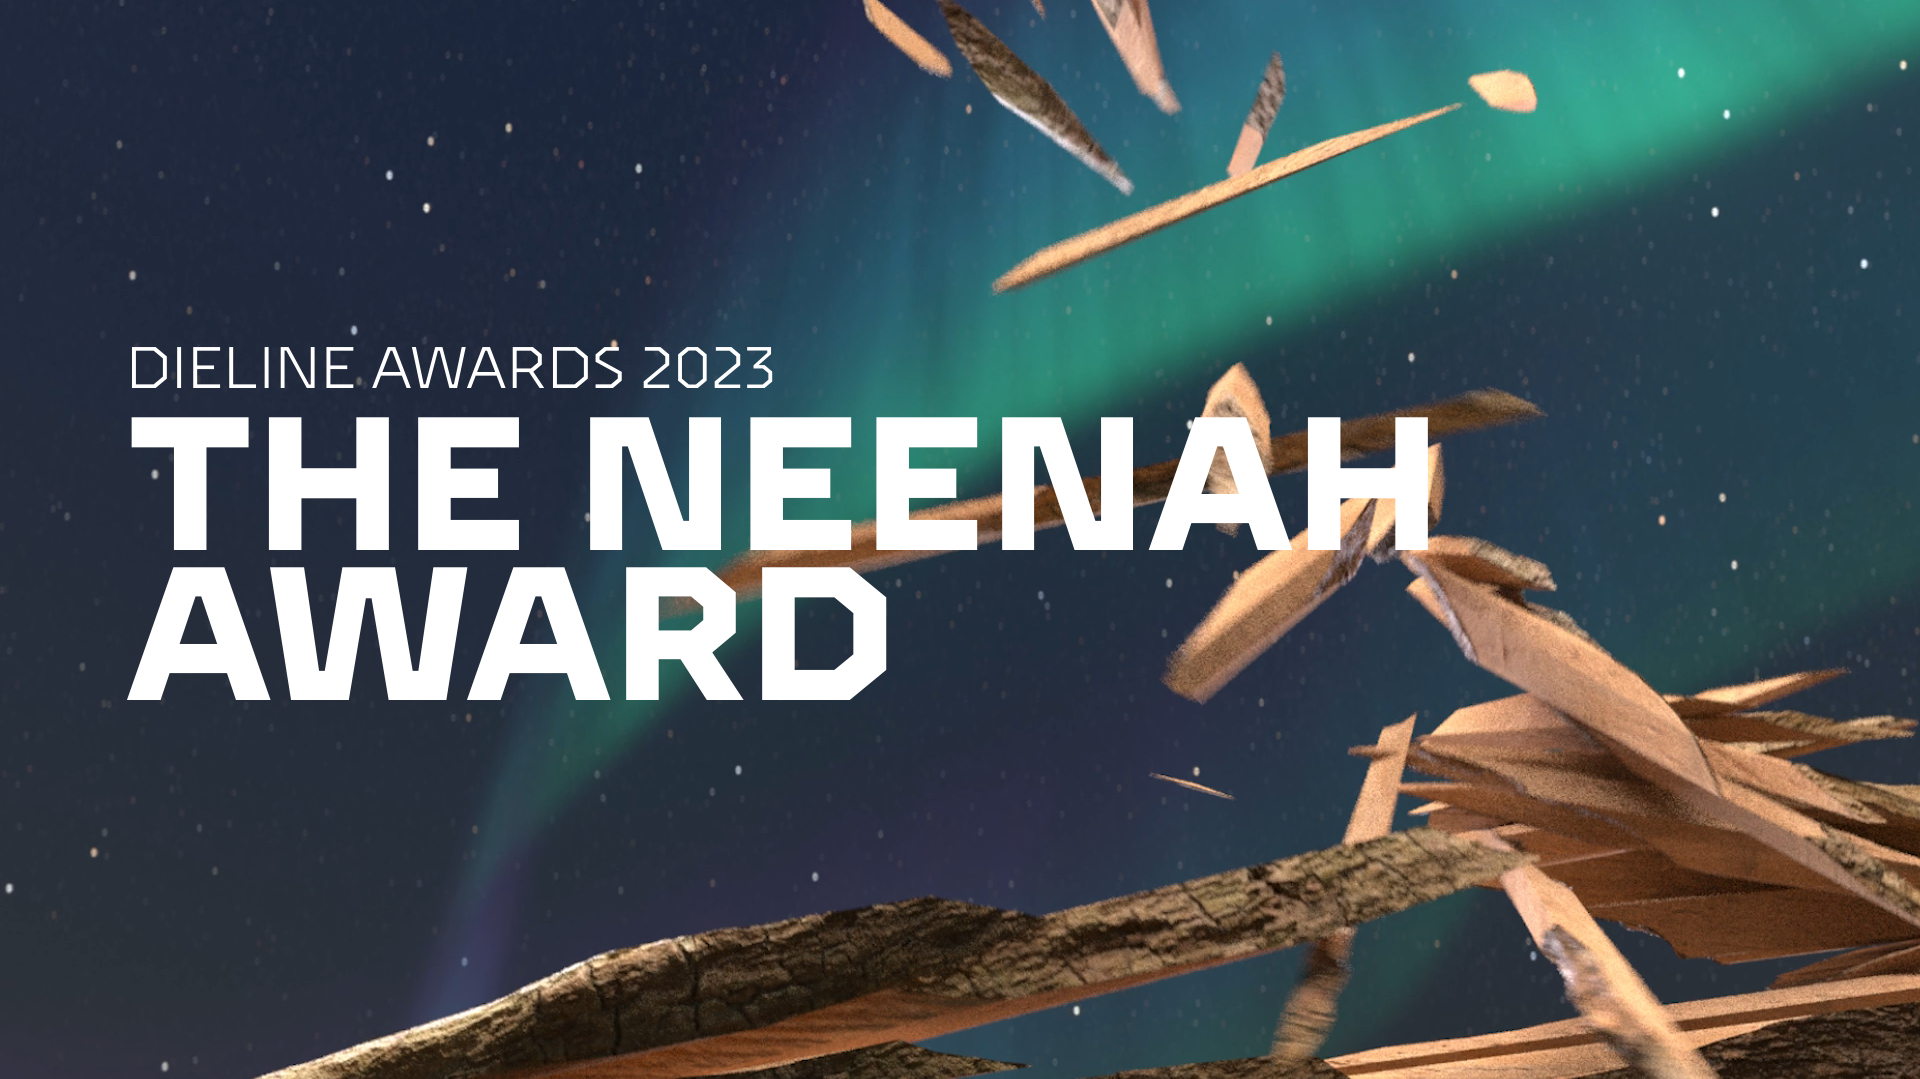 What’s The Neenah Award?